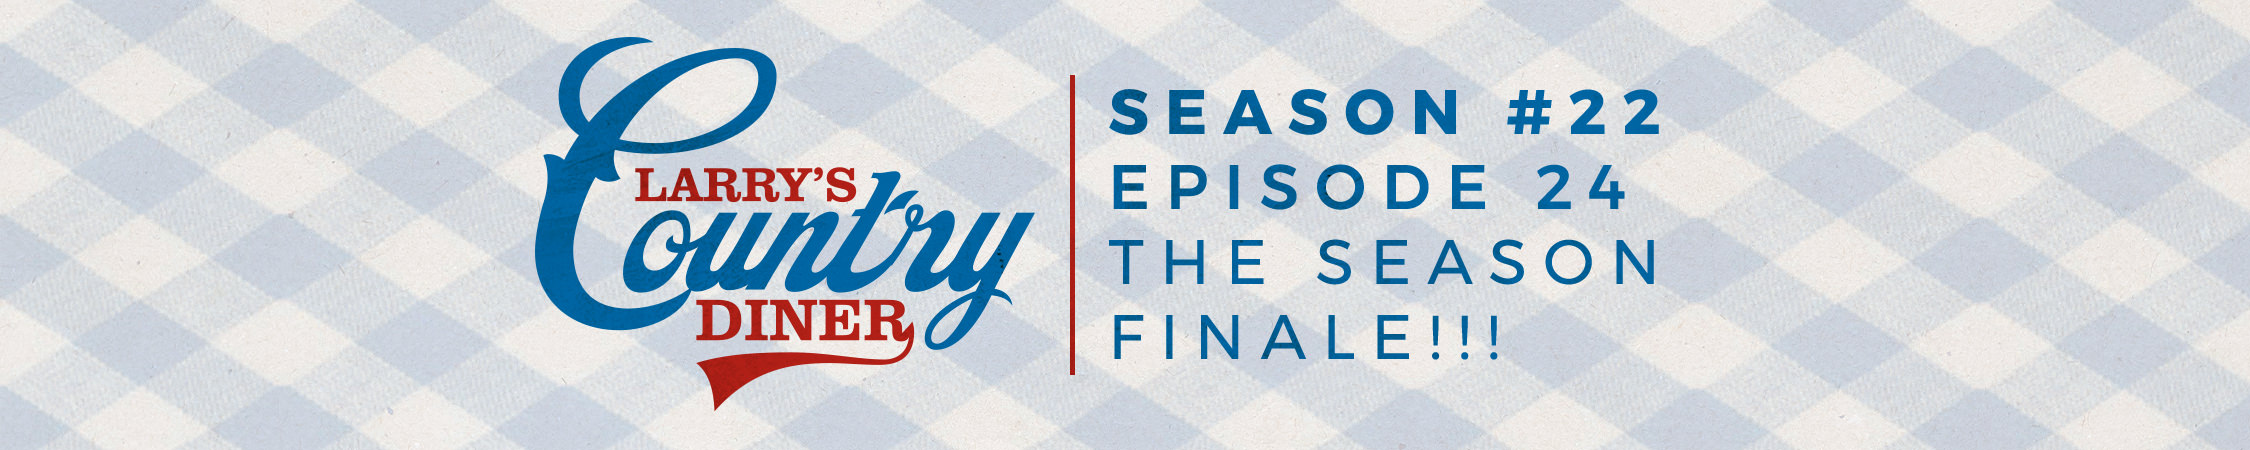 Season 22 Finale Banner